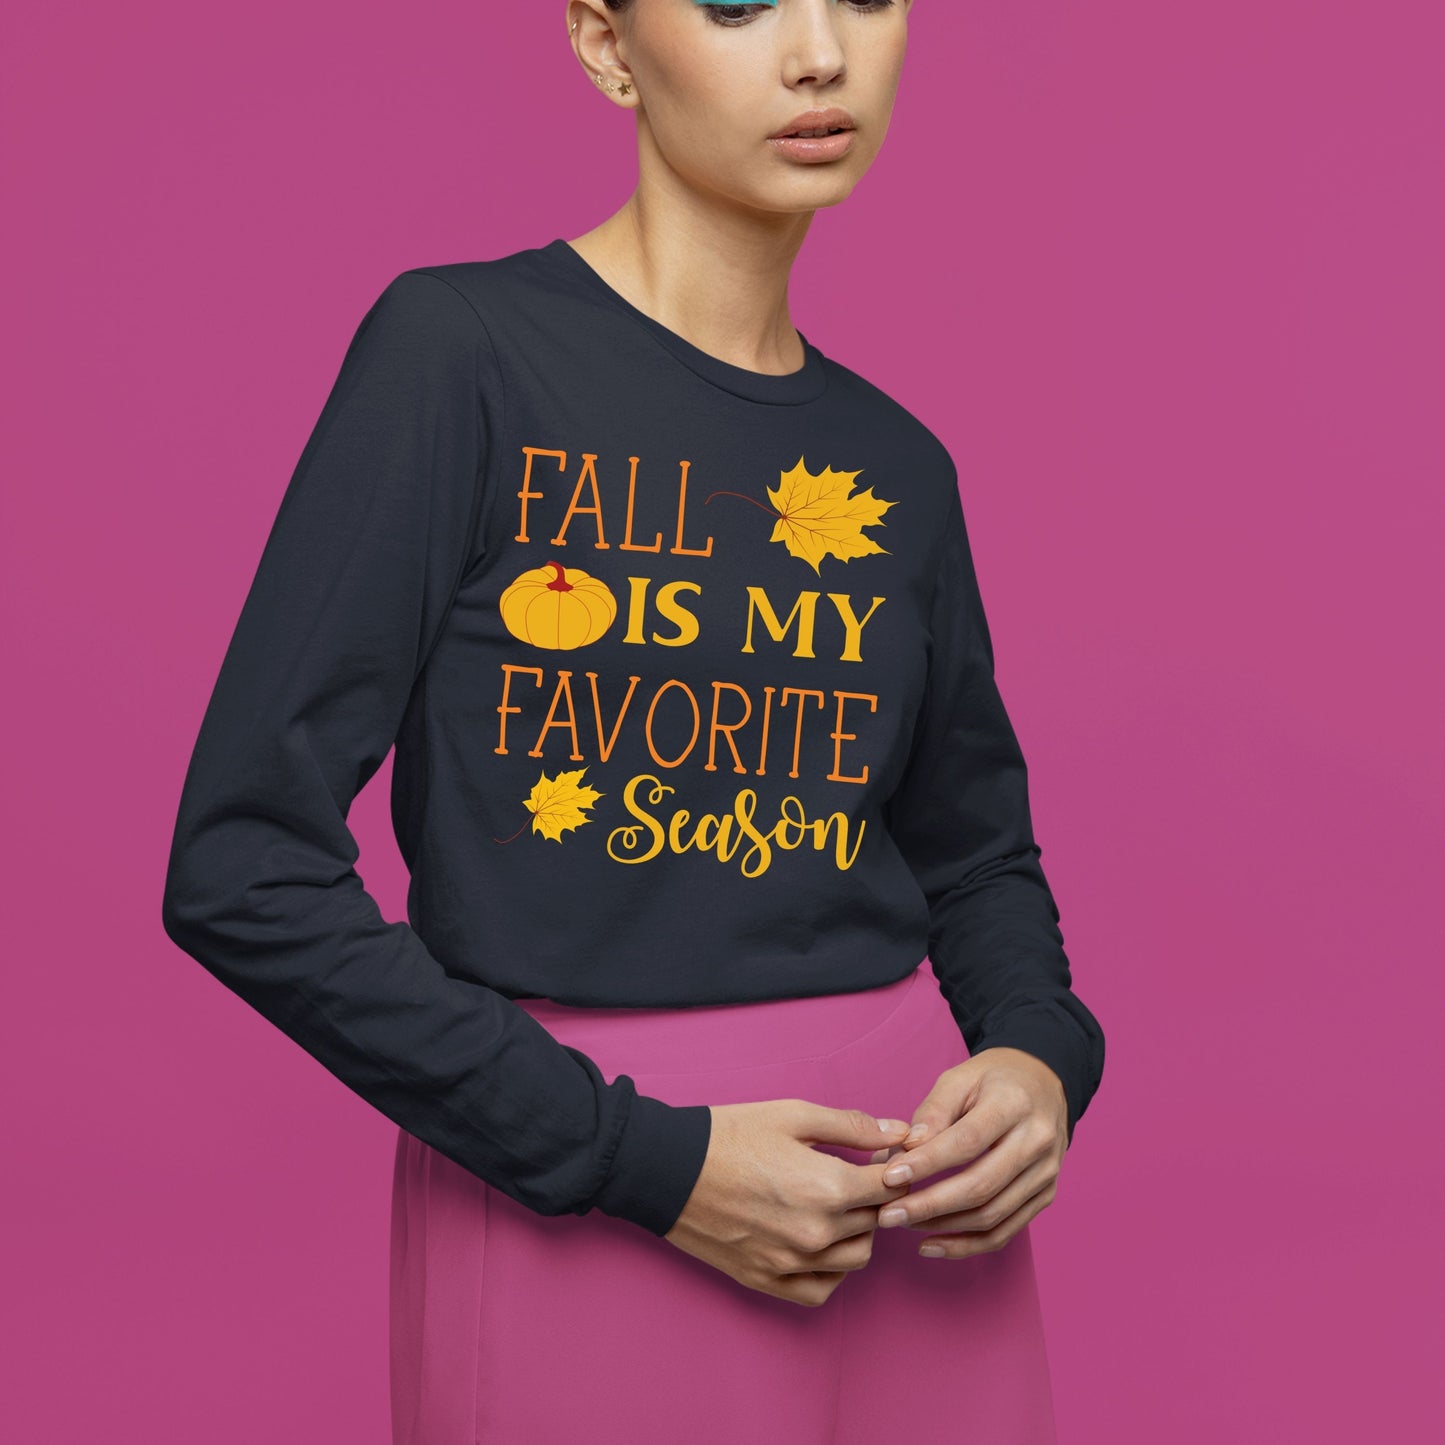 Fall Is My Favourite Sweatshirt, Fall Sweatshirt, Fall Sweater for Men, Fall Sweater for Women, Fall Gift Ideas, Cute Fall Sweatshirt